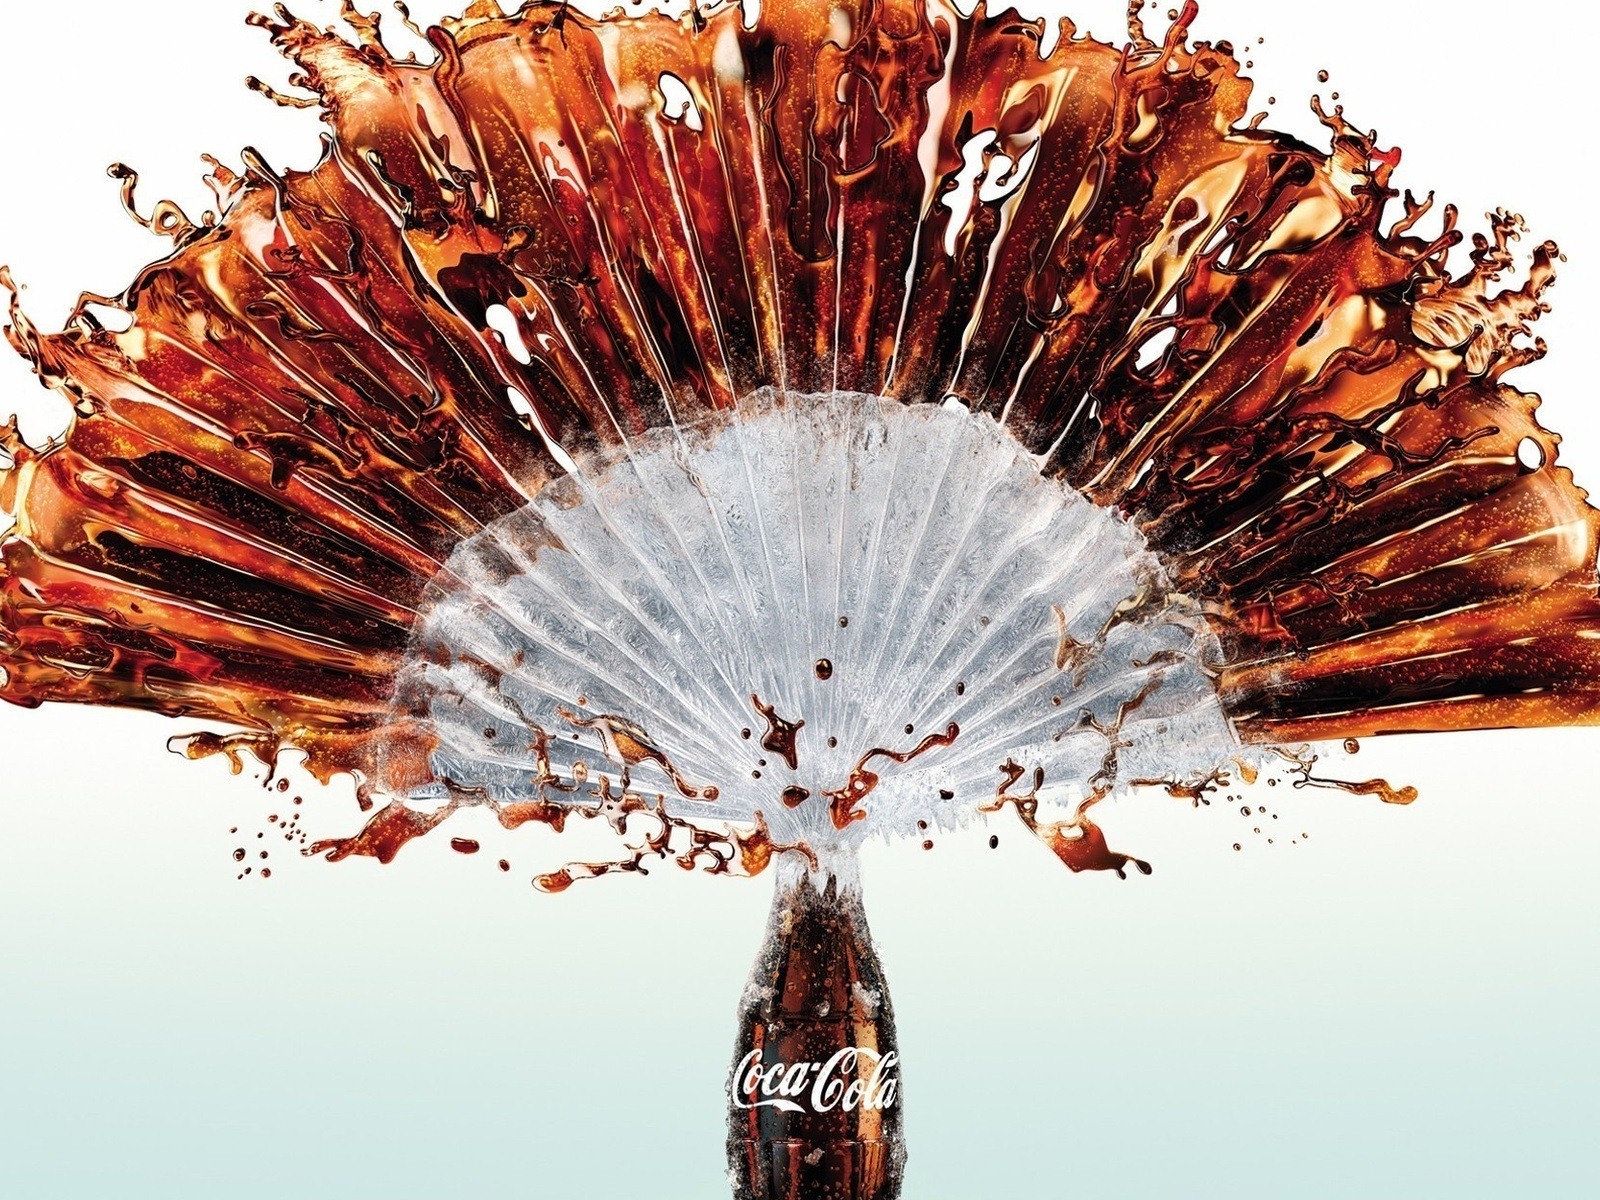 Coca-Cola 可口可乐精美广告壁纸1 - 1600x1200